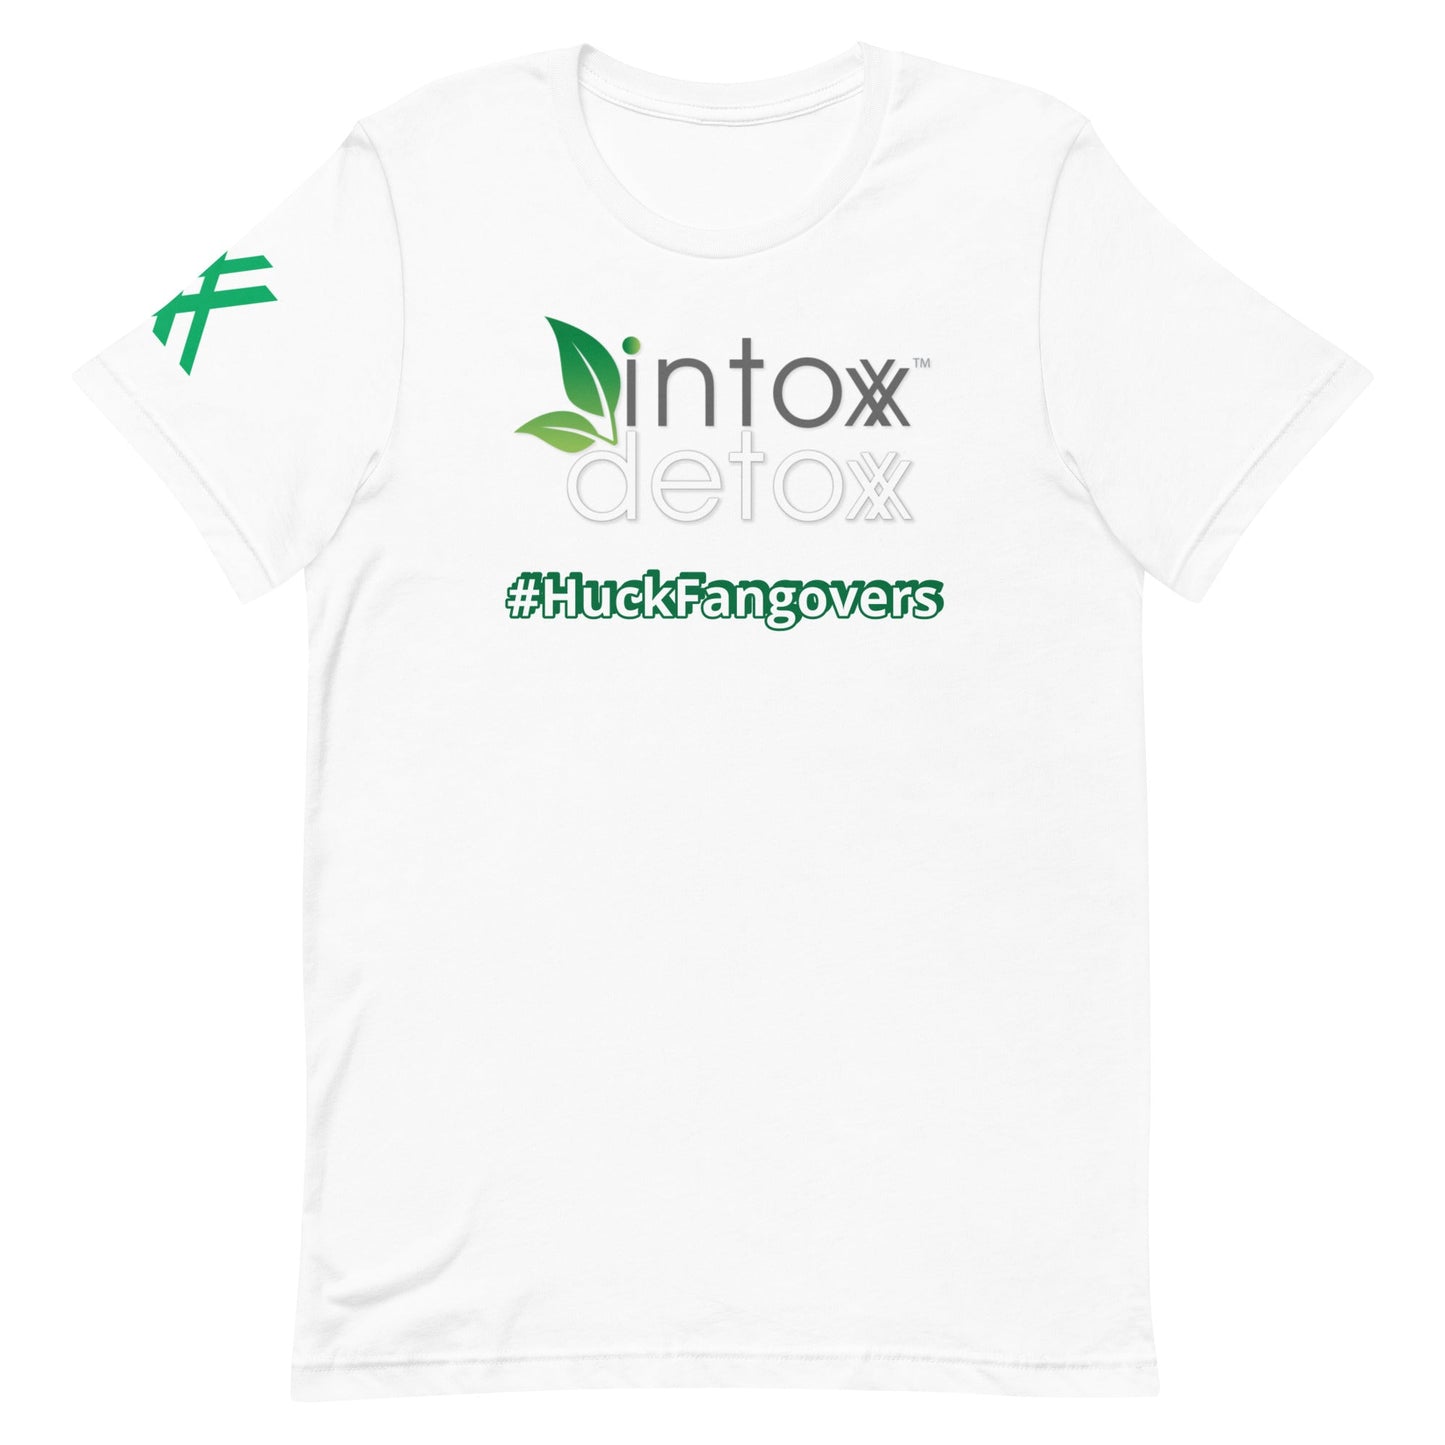 AB's Intox-Detox Short-Sleeve Unisex T-Shirt